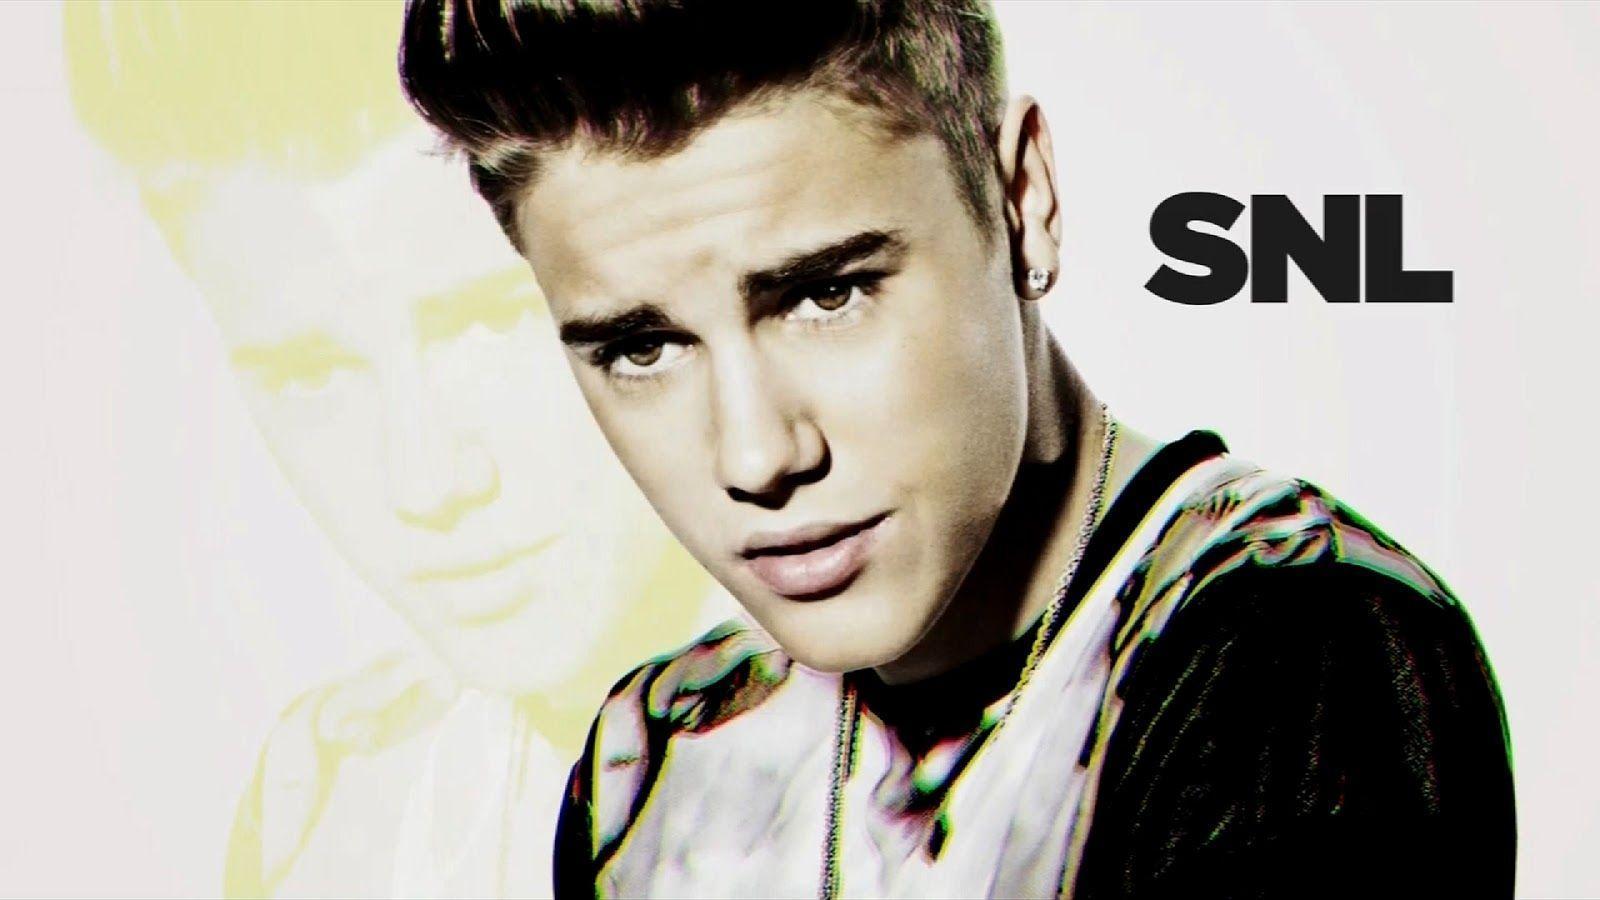 Justin Bieber Picture, Wallpaper, Photo, Image Download